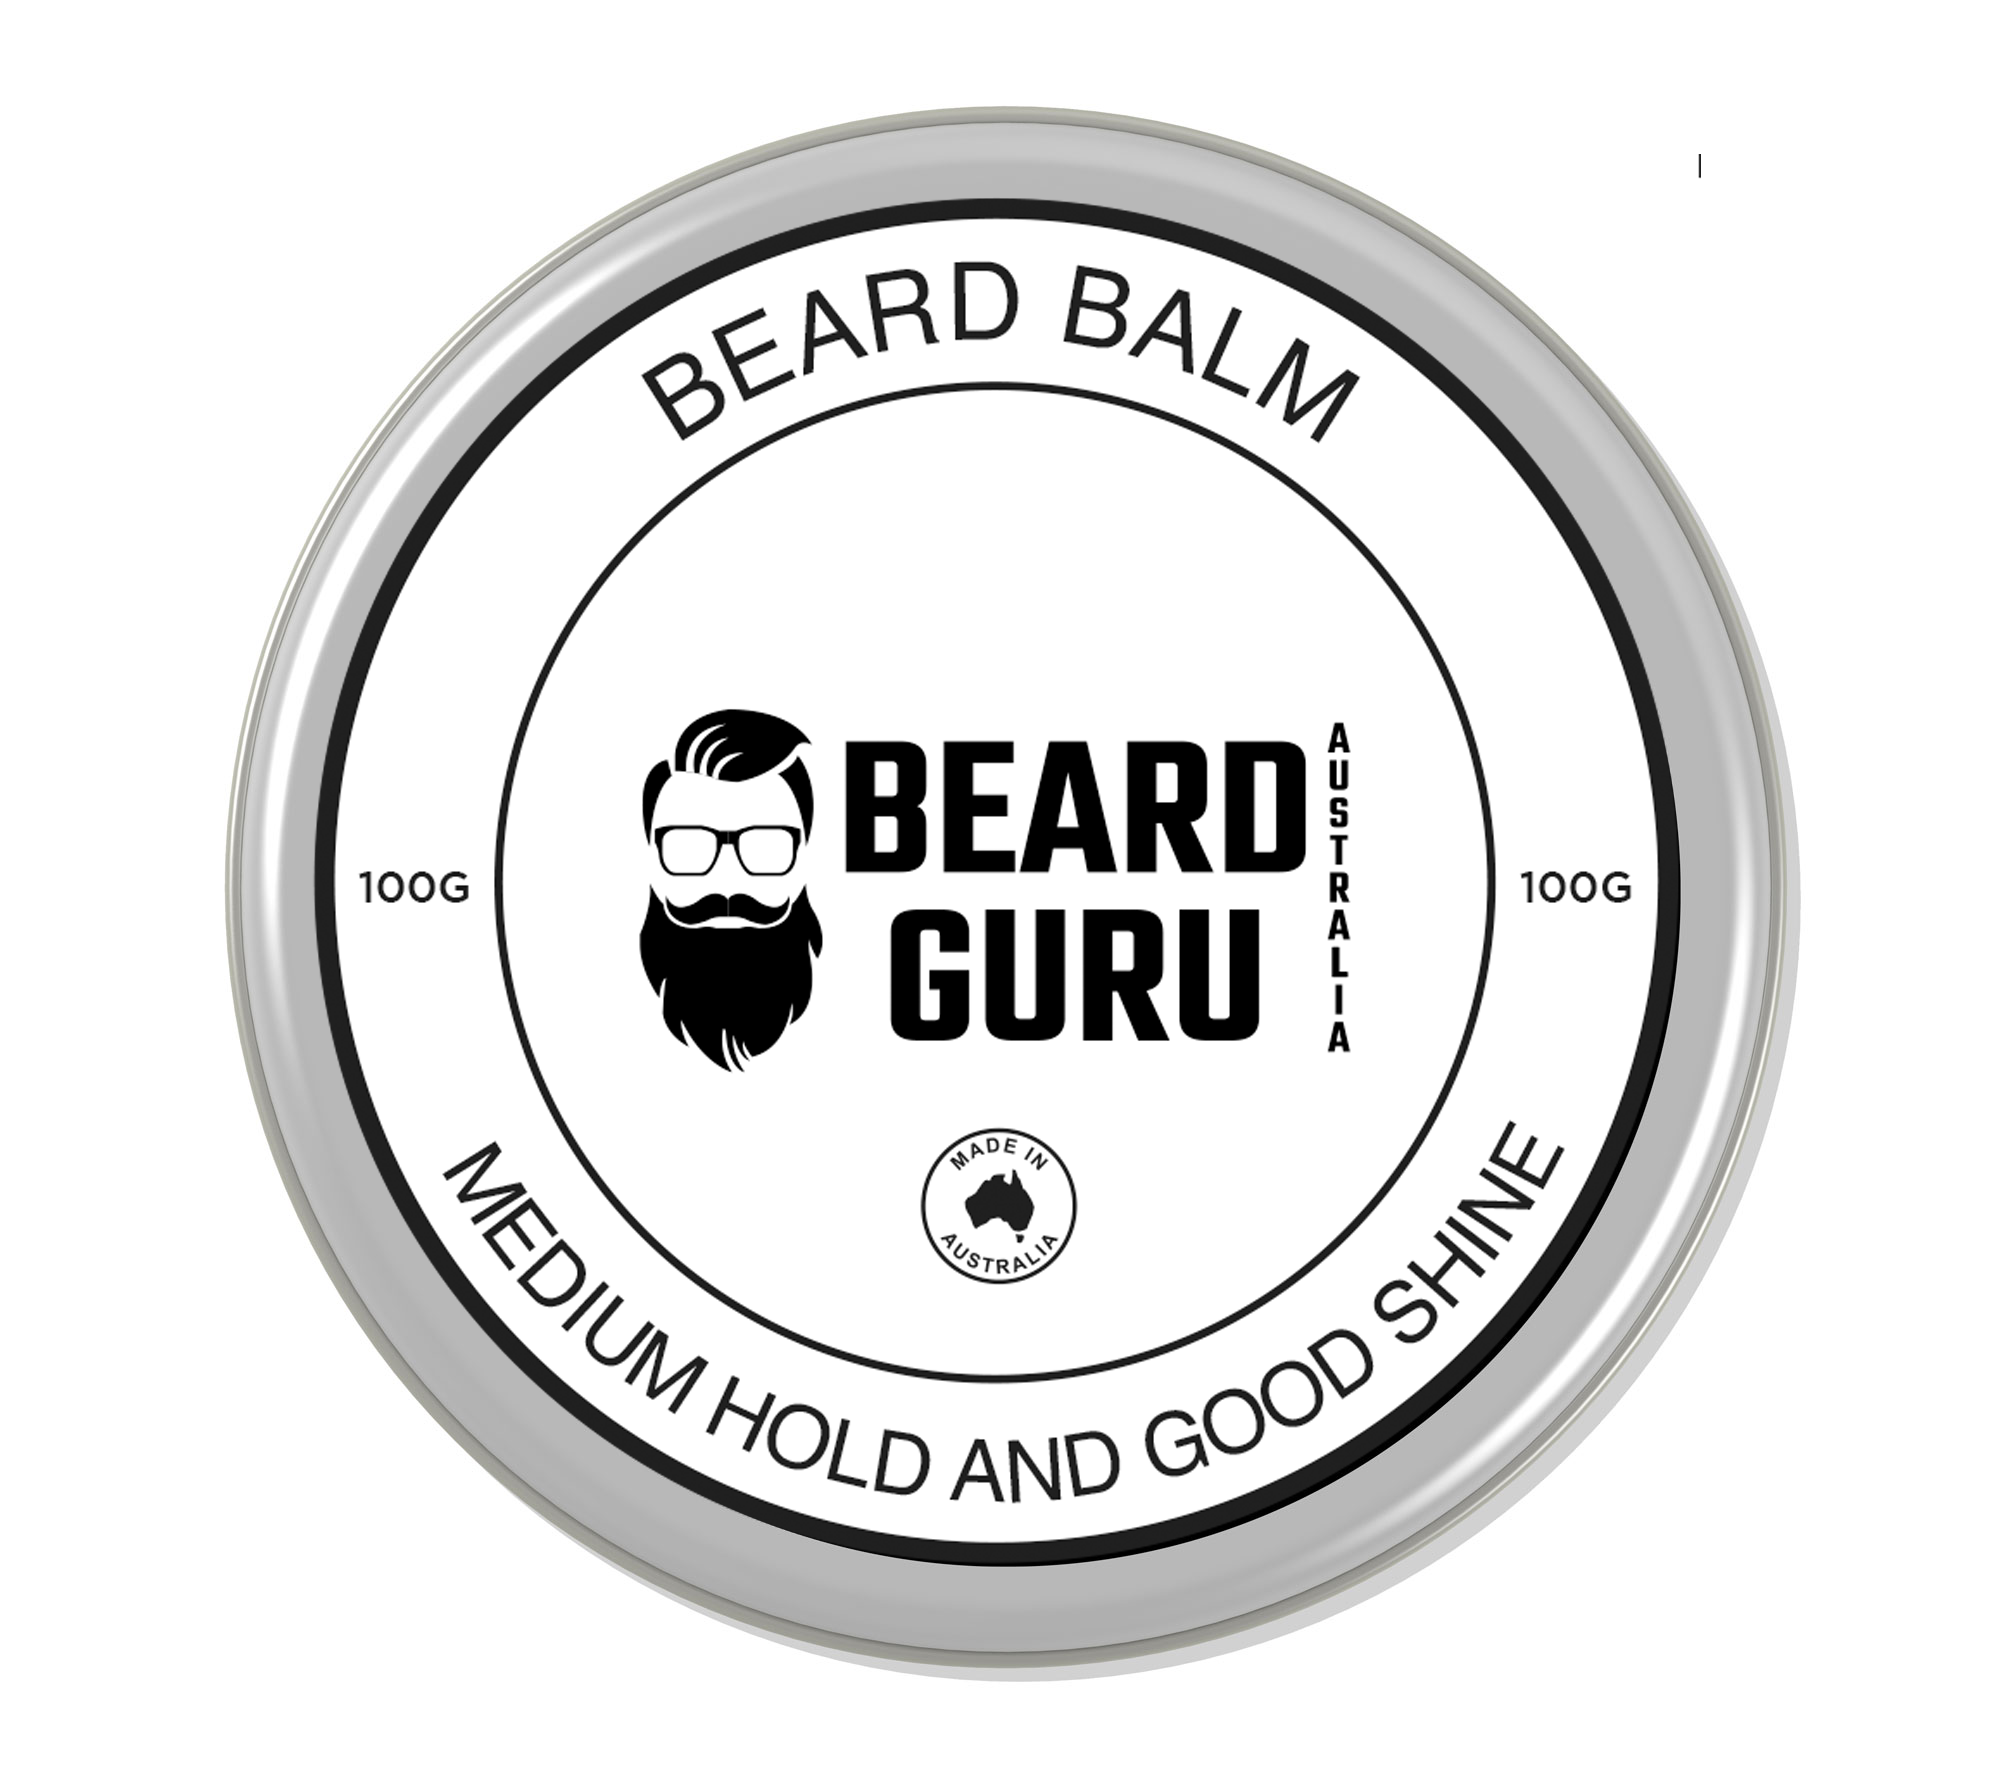 Pro Beard Straightener Package with Australian Beard oil, Balm and Beard Wash